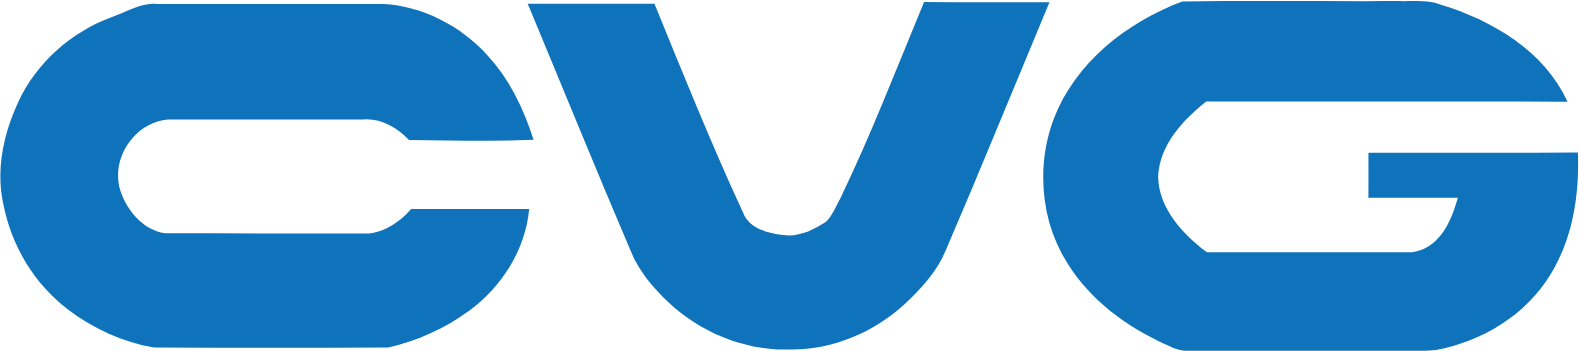 Commercial Vehicle Group (CVG) logo (transparent PNG)